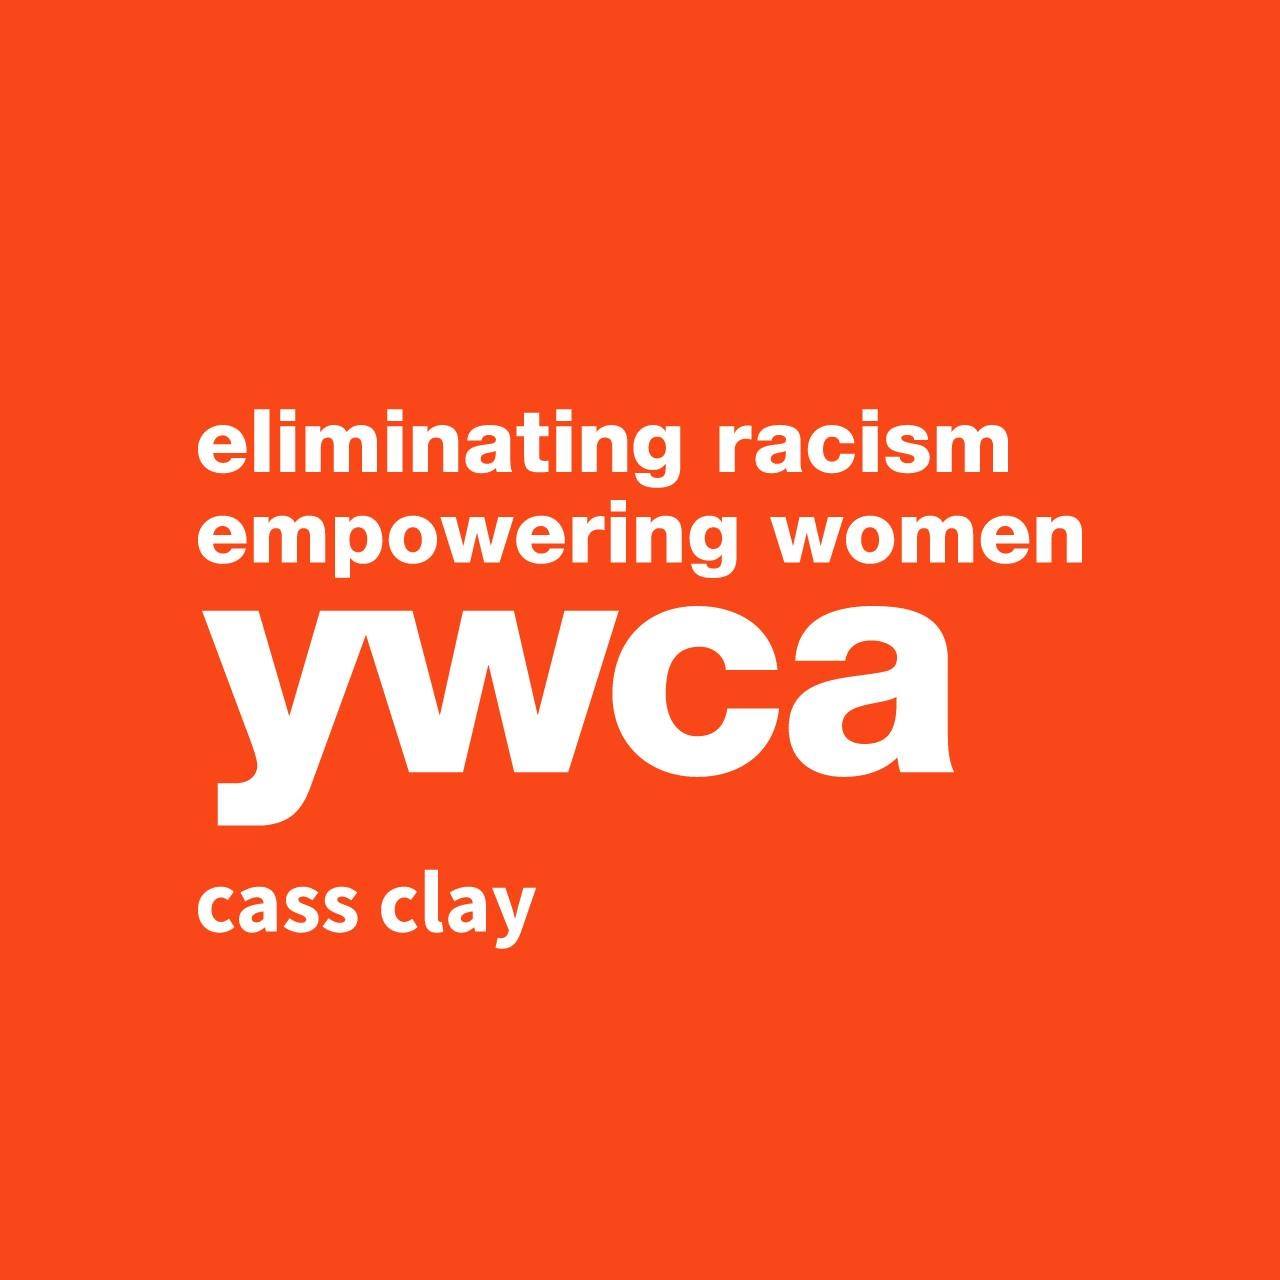 YWCA Cass Clay Emergency Food Pantry